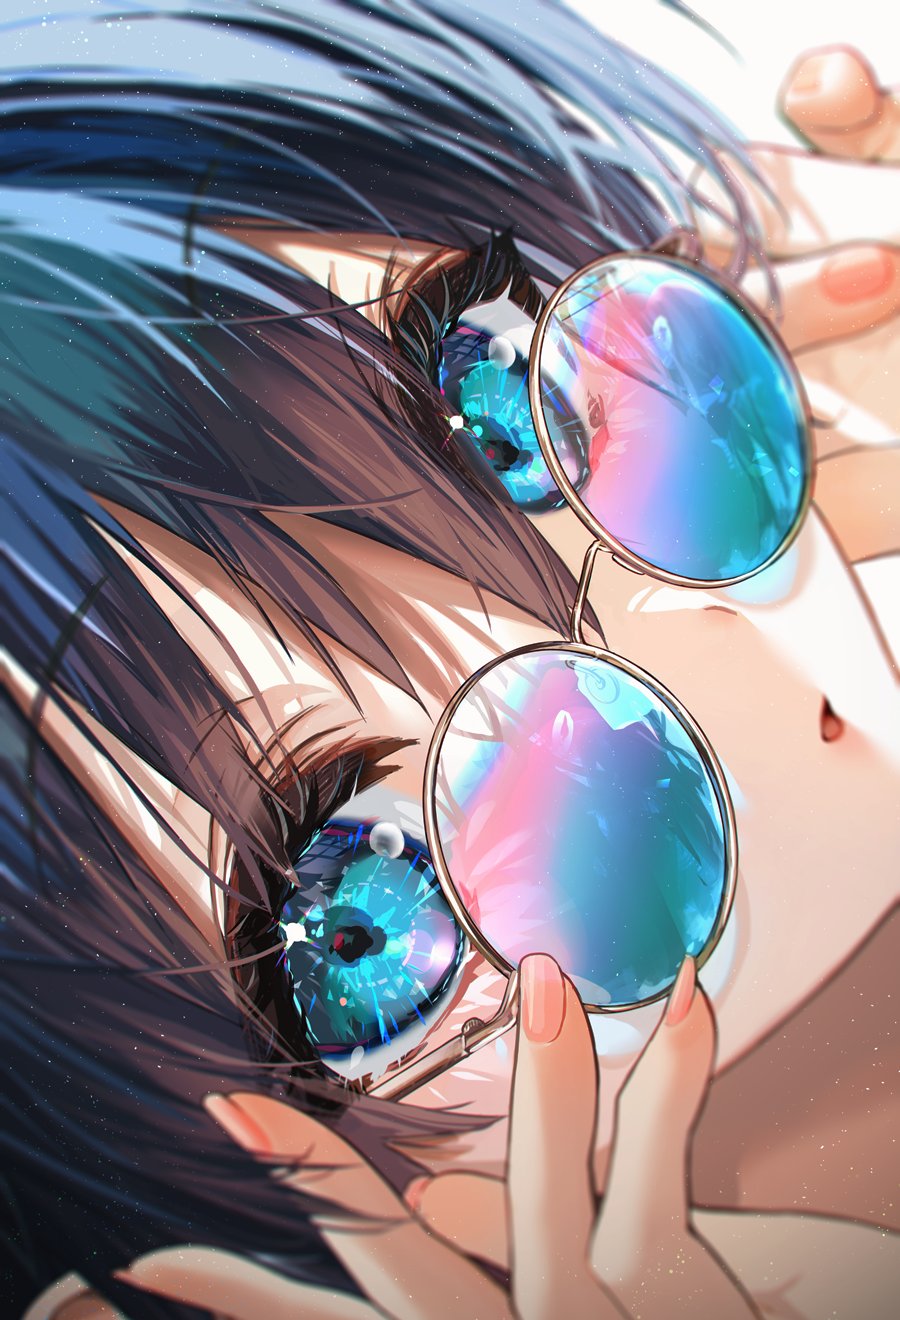 Anime 900x1320 digital art artwork illustration anime anime girls women dark hair glasses closeup face women with glasses blue eyes portrait display looking at viewer